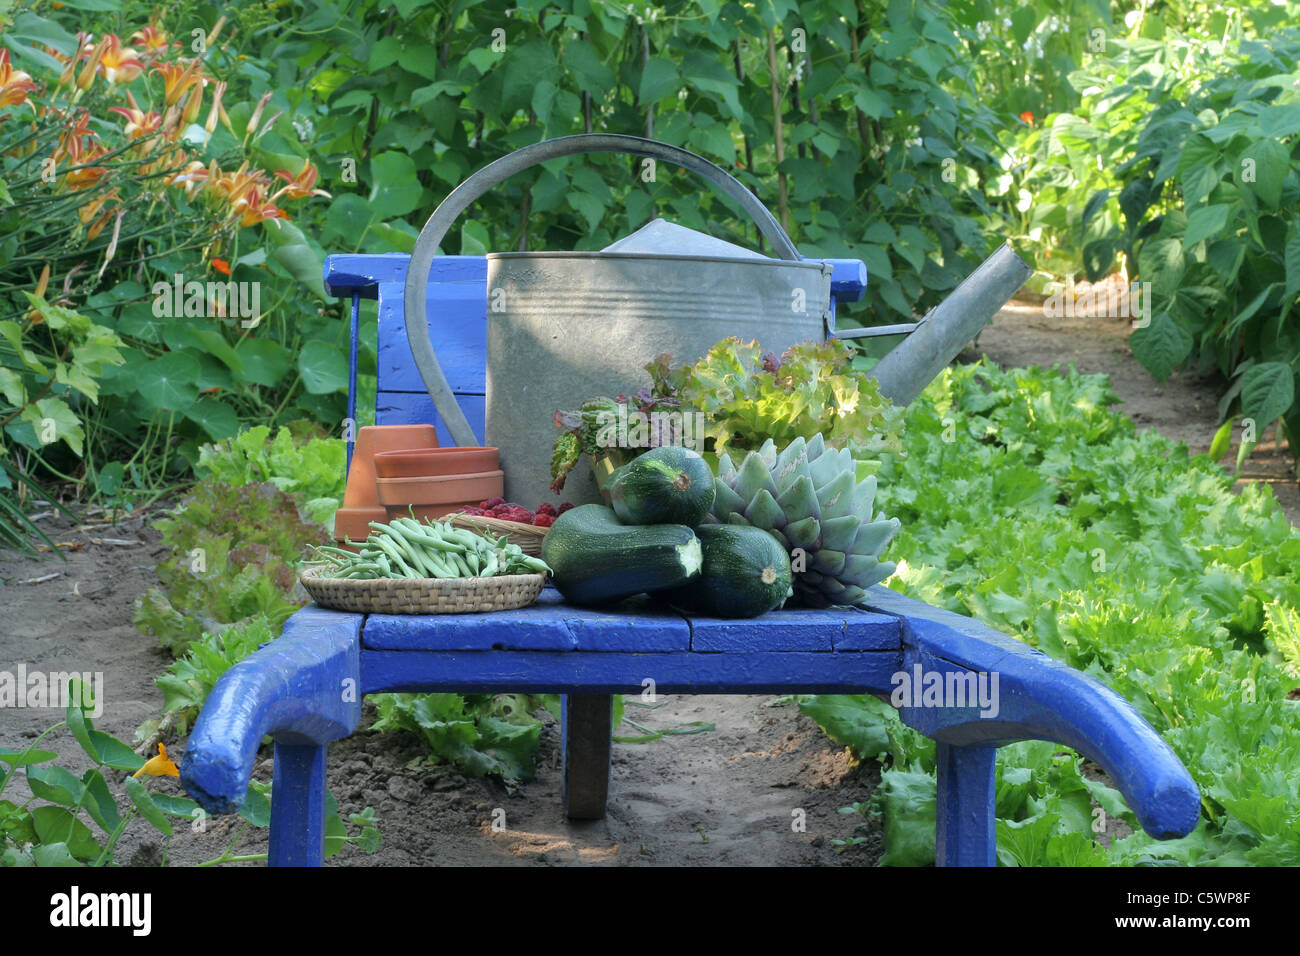 Vegetables from the garden on the wheelbarrow : green beans, artichoke, squashes, lettuce. Stock Photo